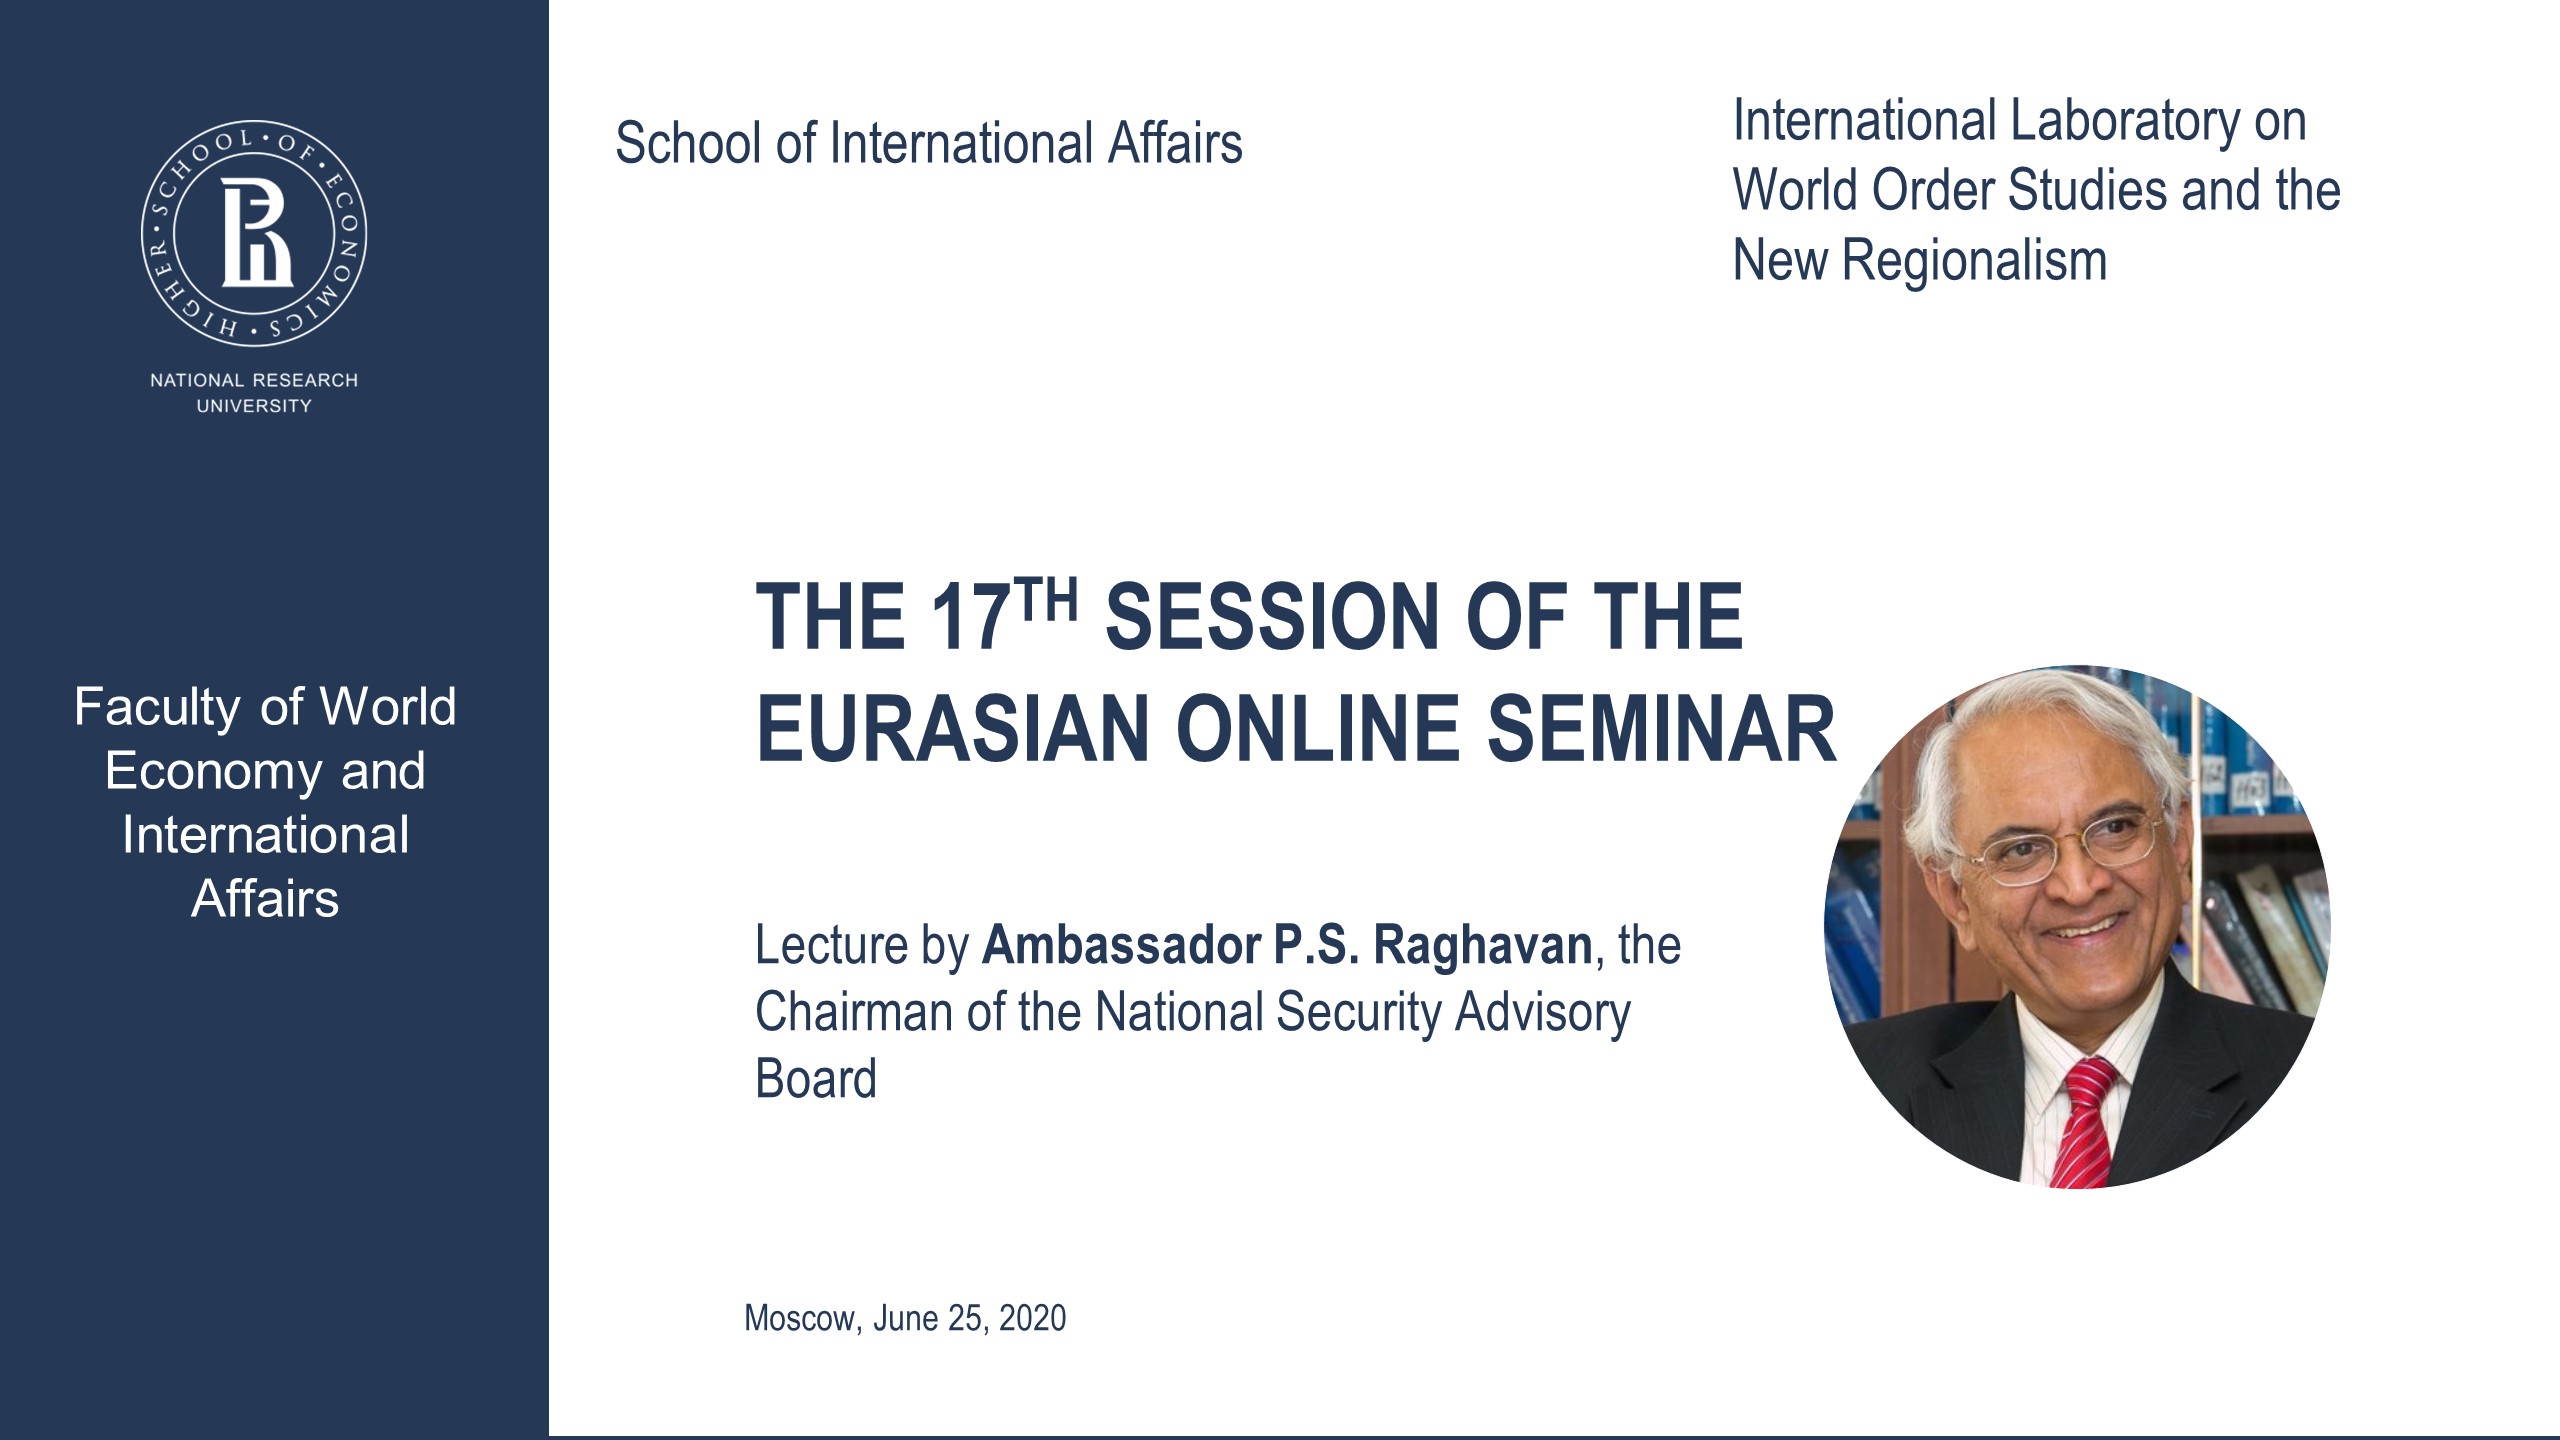 The 17th Session of Eurasian Online Seminar with Ambassador P.S.Raghavan